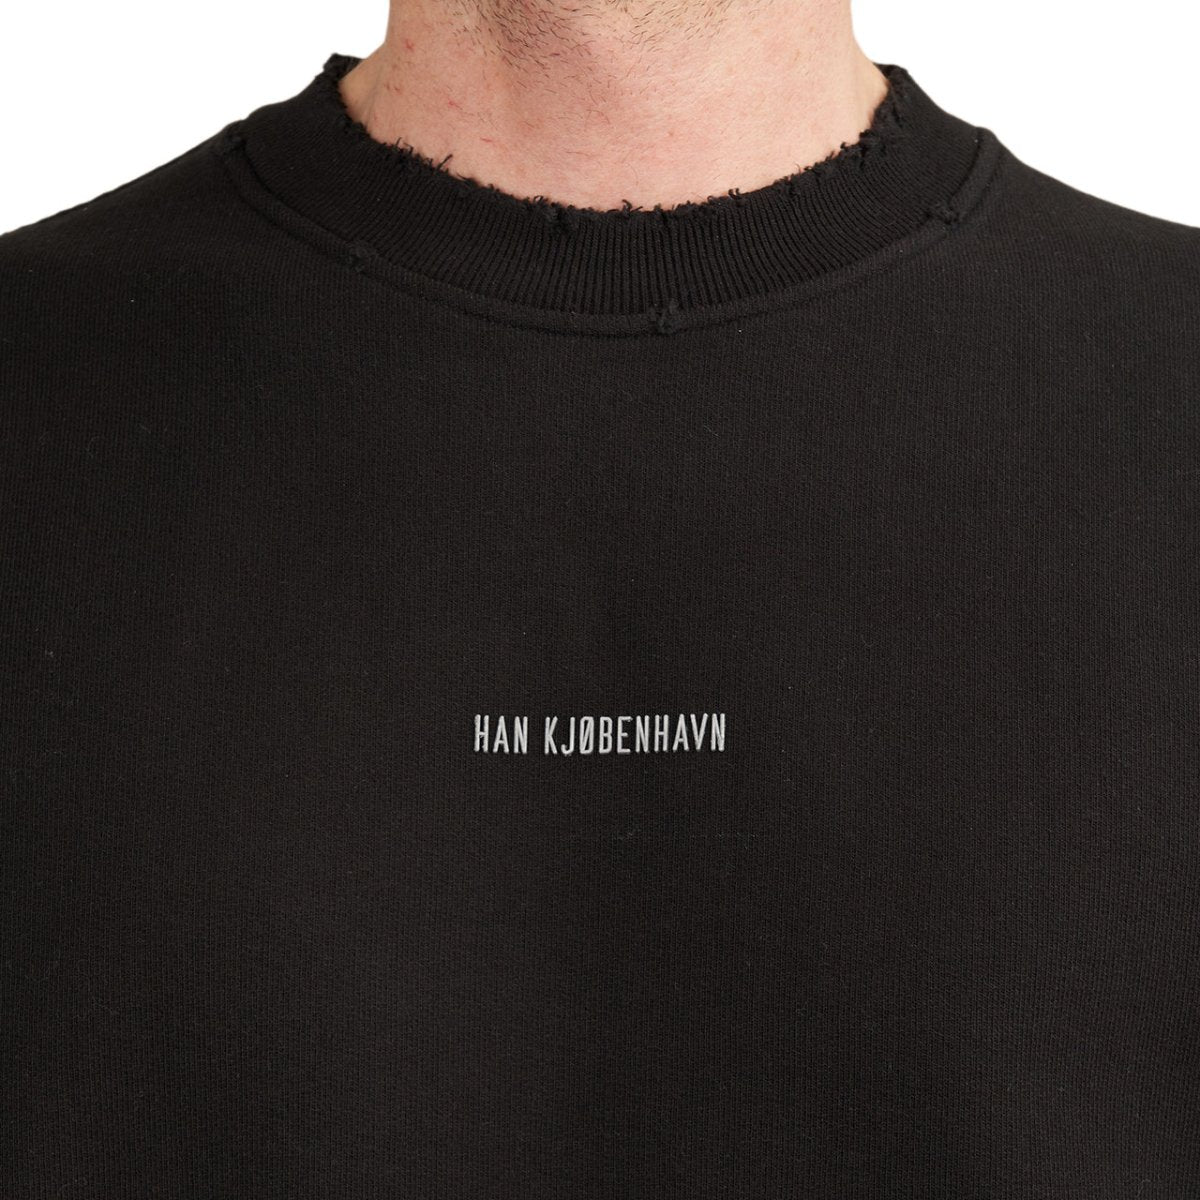 Han Kjobenhavn Distressed Crew Logo (Schwarz)  - Allike Store